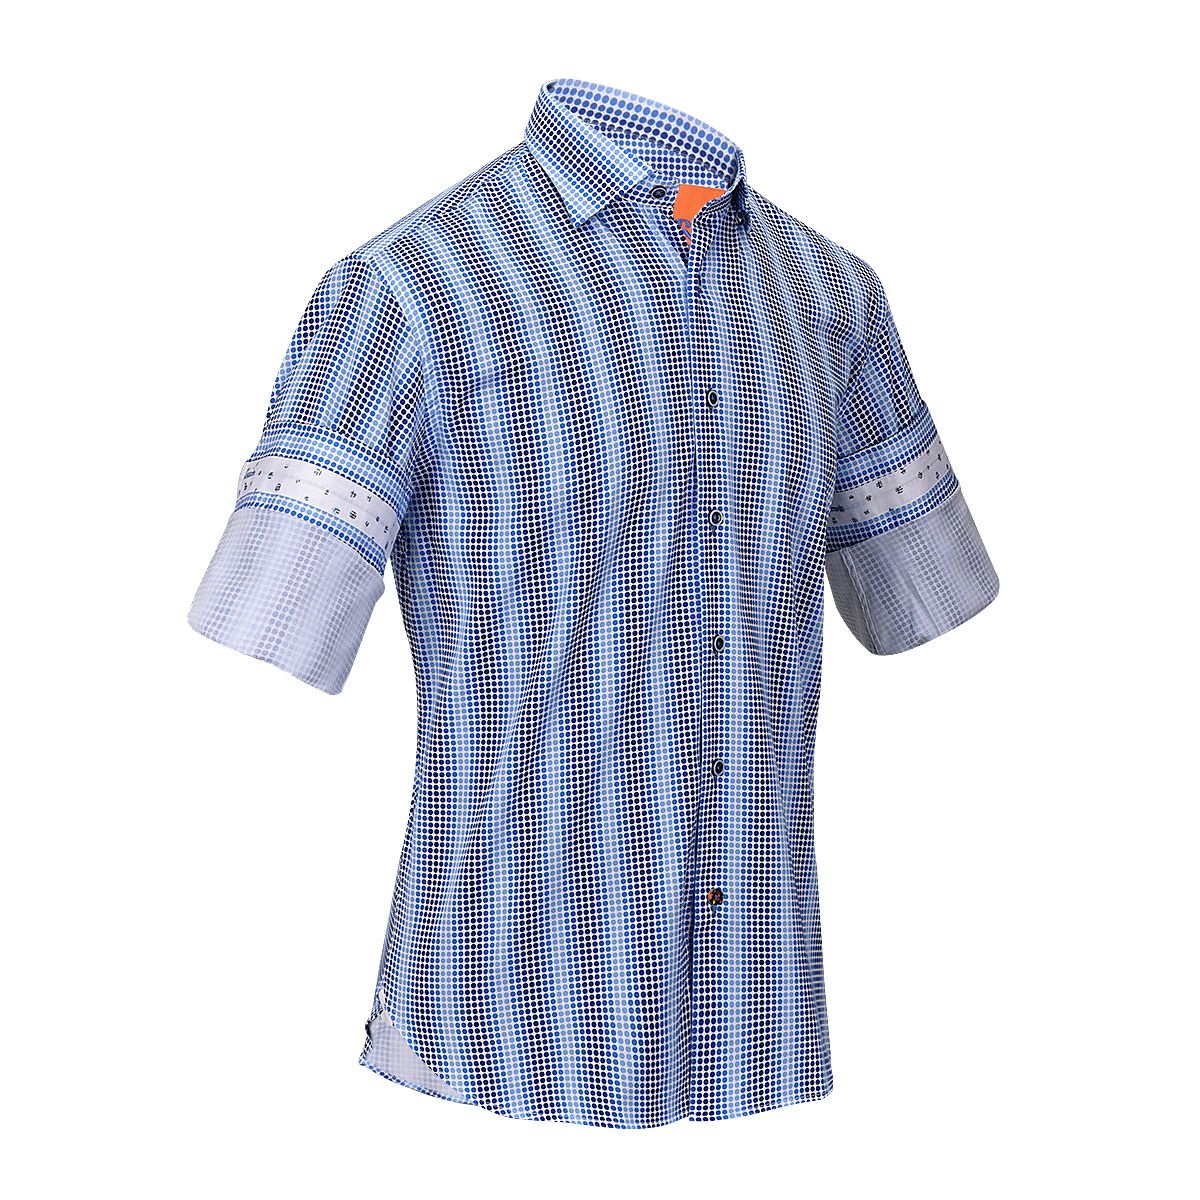 CM04619 - Cuadra blue casual fashion long sleeve cotton shirt for men.-Kuet.us